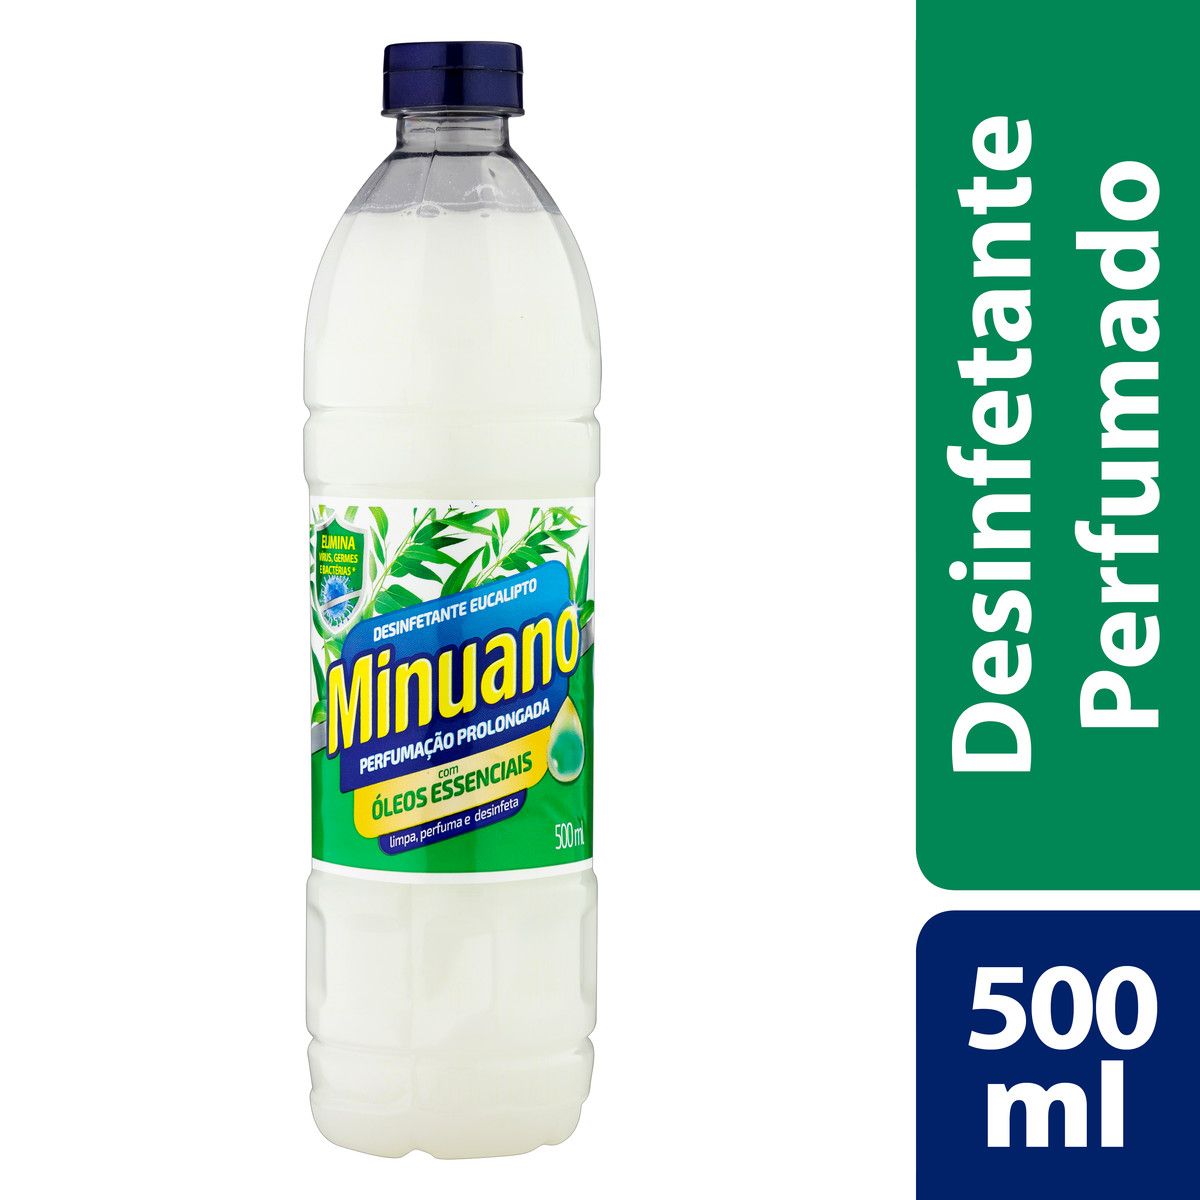 Desinfetante Minuano Eucalipto 500ml image number 1